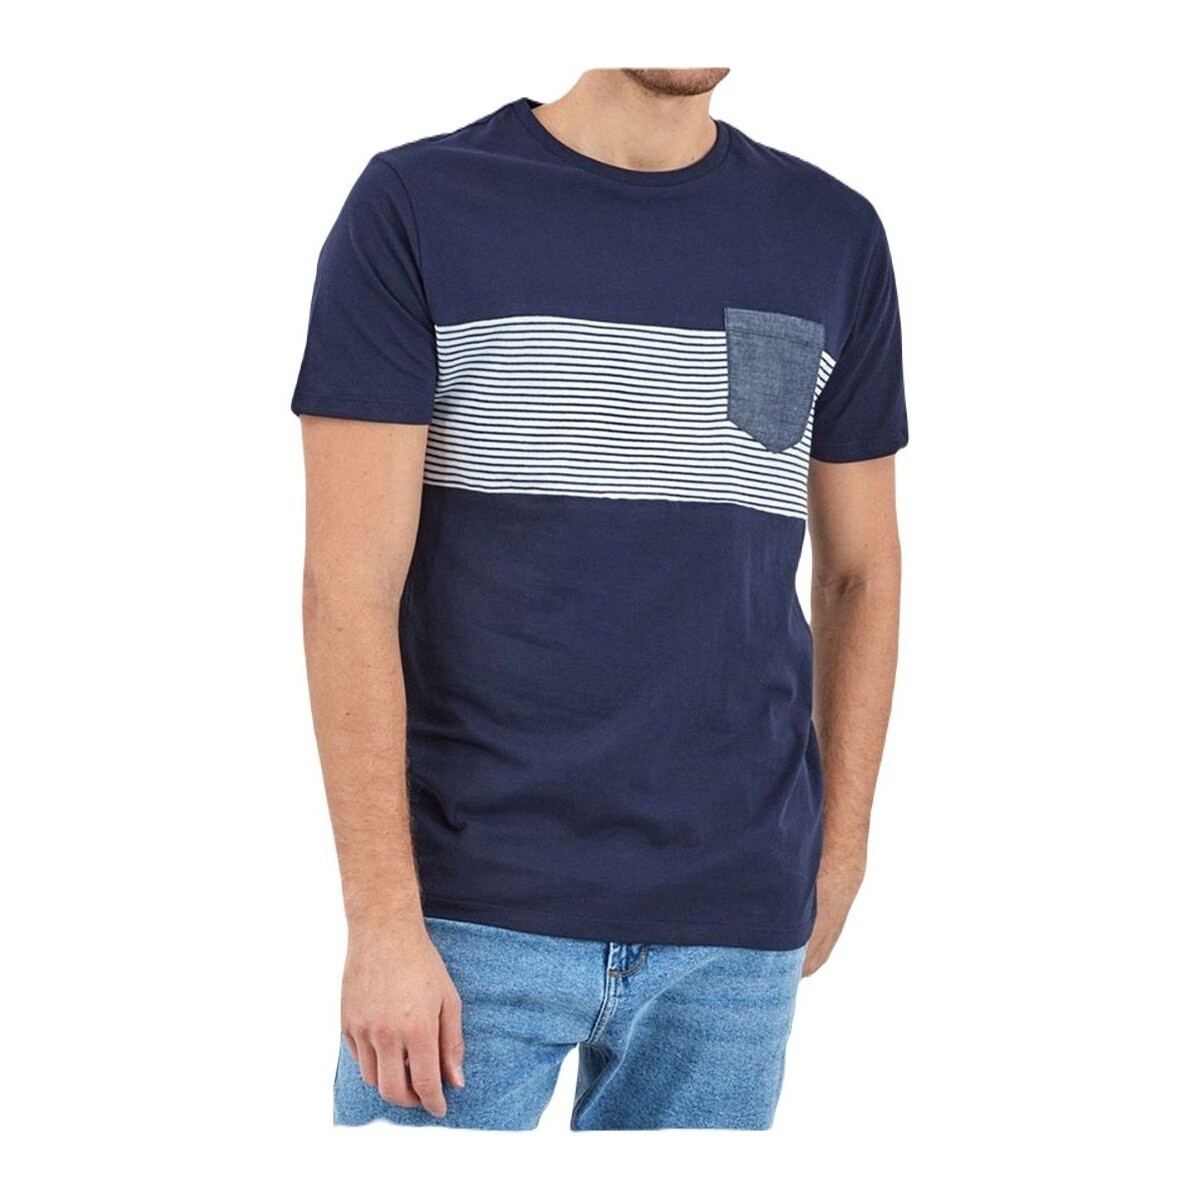 Piazza Italia  Pánské tričko s kapsičkou Pocket navy  Tmavě modrá